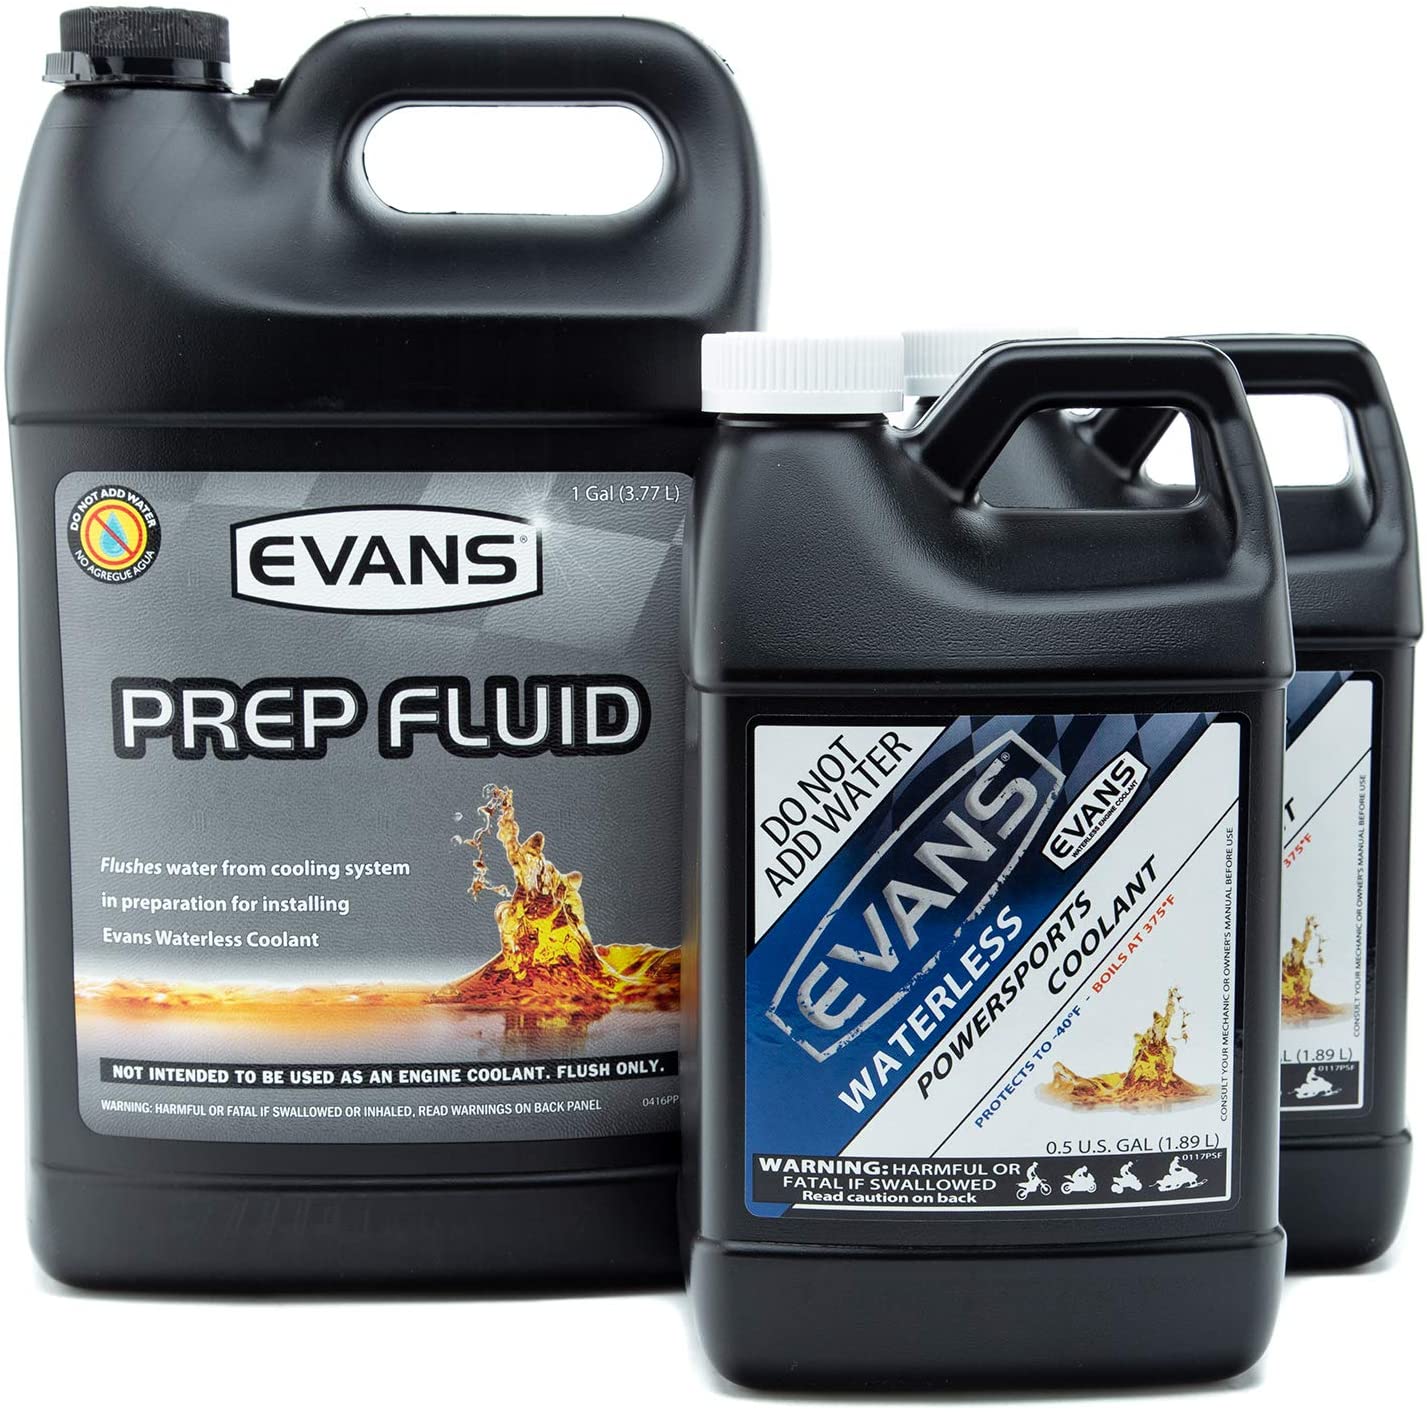 evans waterless coolant prep fluid